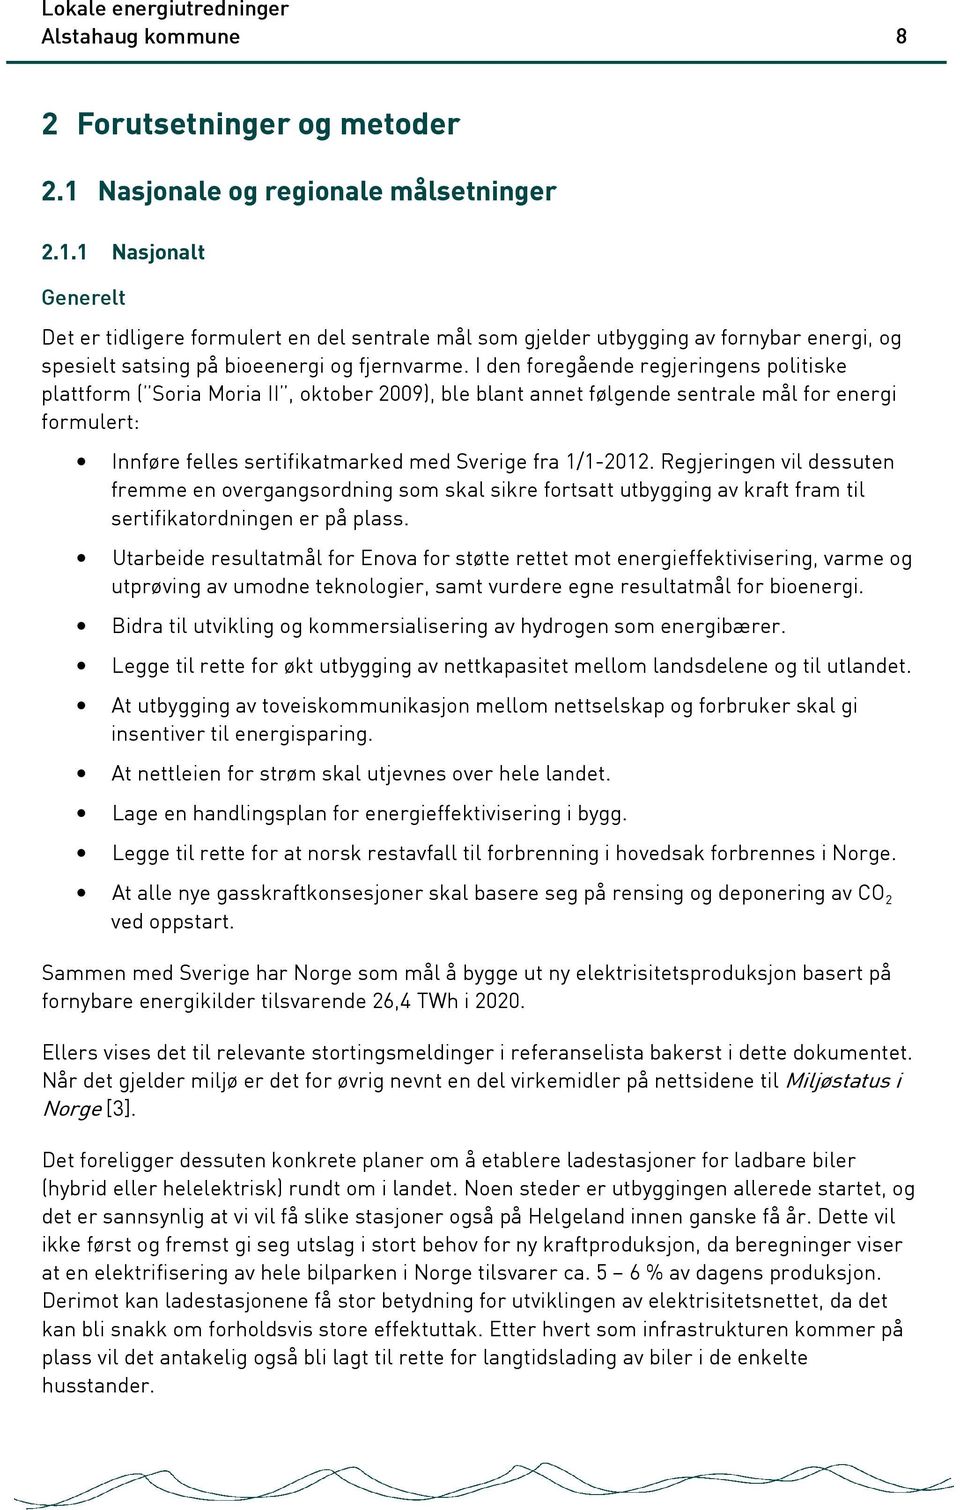 I den foregående regjeringens politiske plattform ( Soria Moria II, oktober 2009), ble blant annet følgende sentrale mål for energi formulert: Innføre felles sertifikatmarked med Sverige fra 1/1-2012.